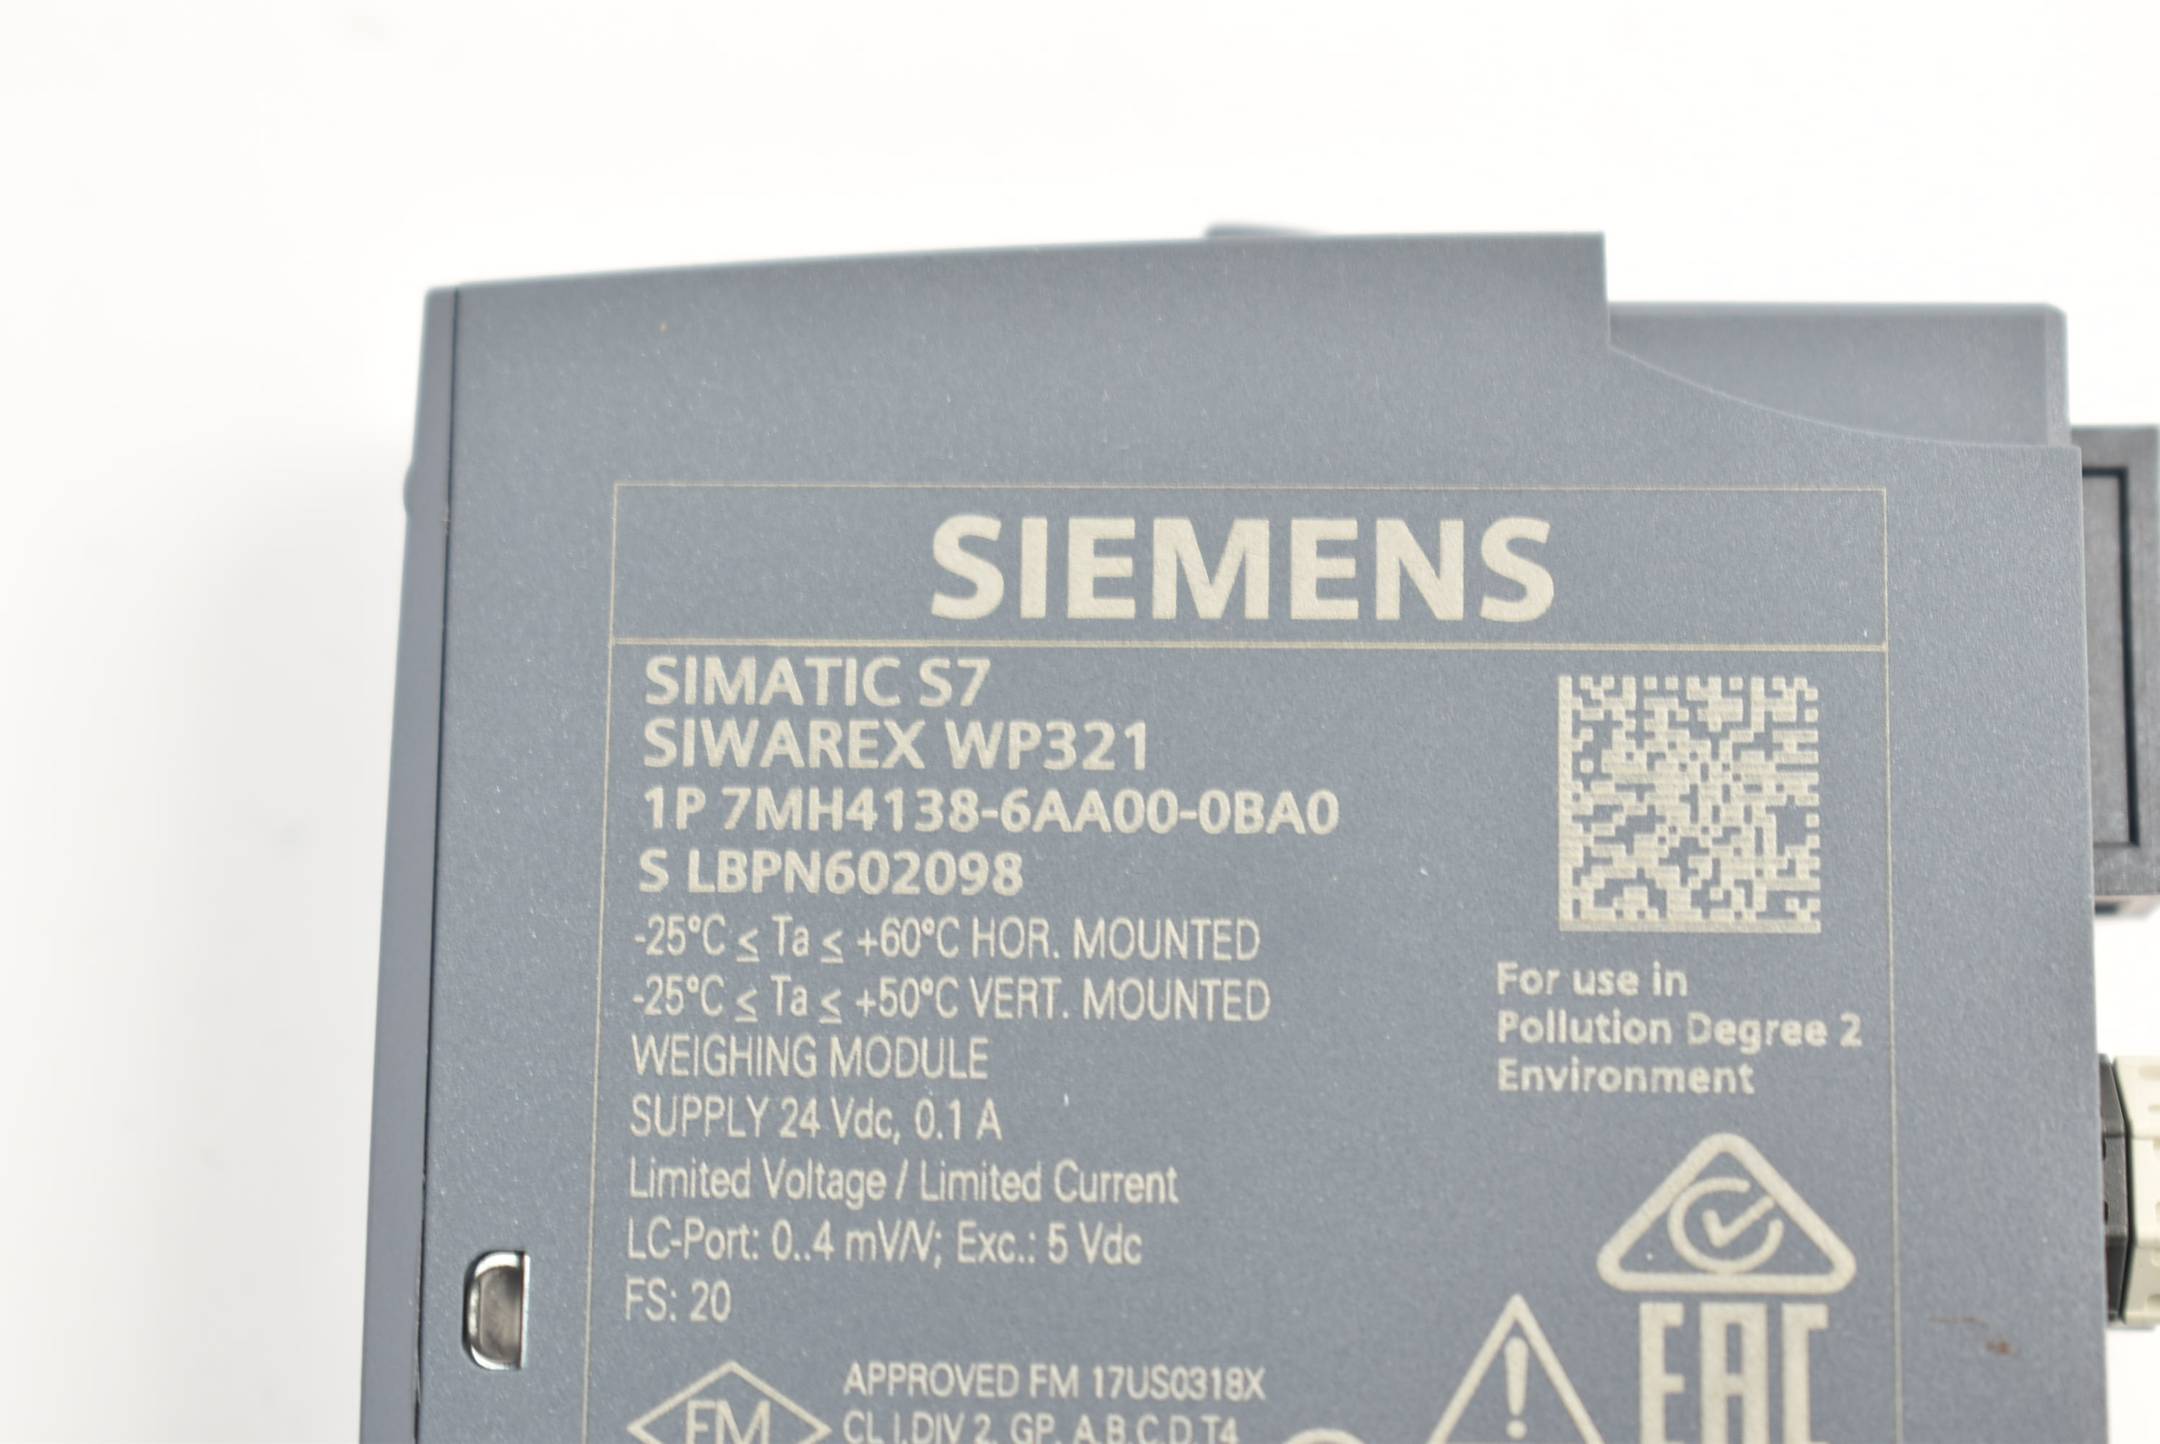 Siemens siwarex WP321 7MH4138-6AA00-0BA0 ( 7MH4 138-6AA00-0BA0 ) E20